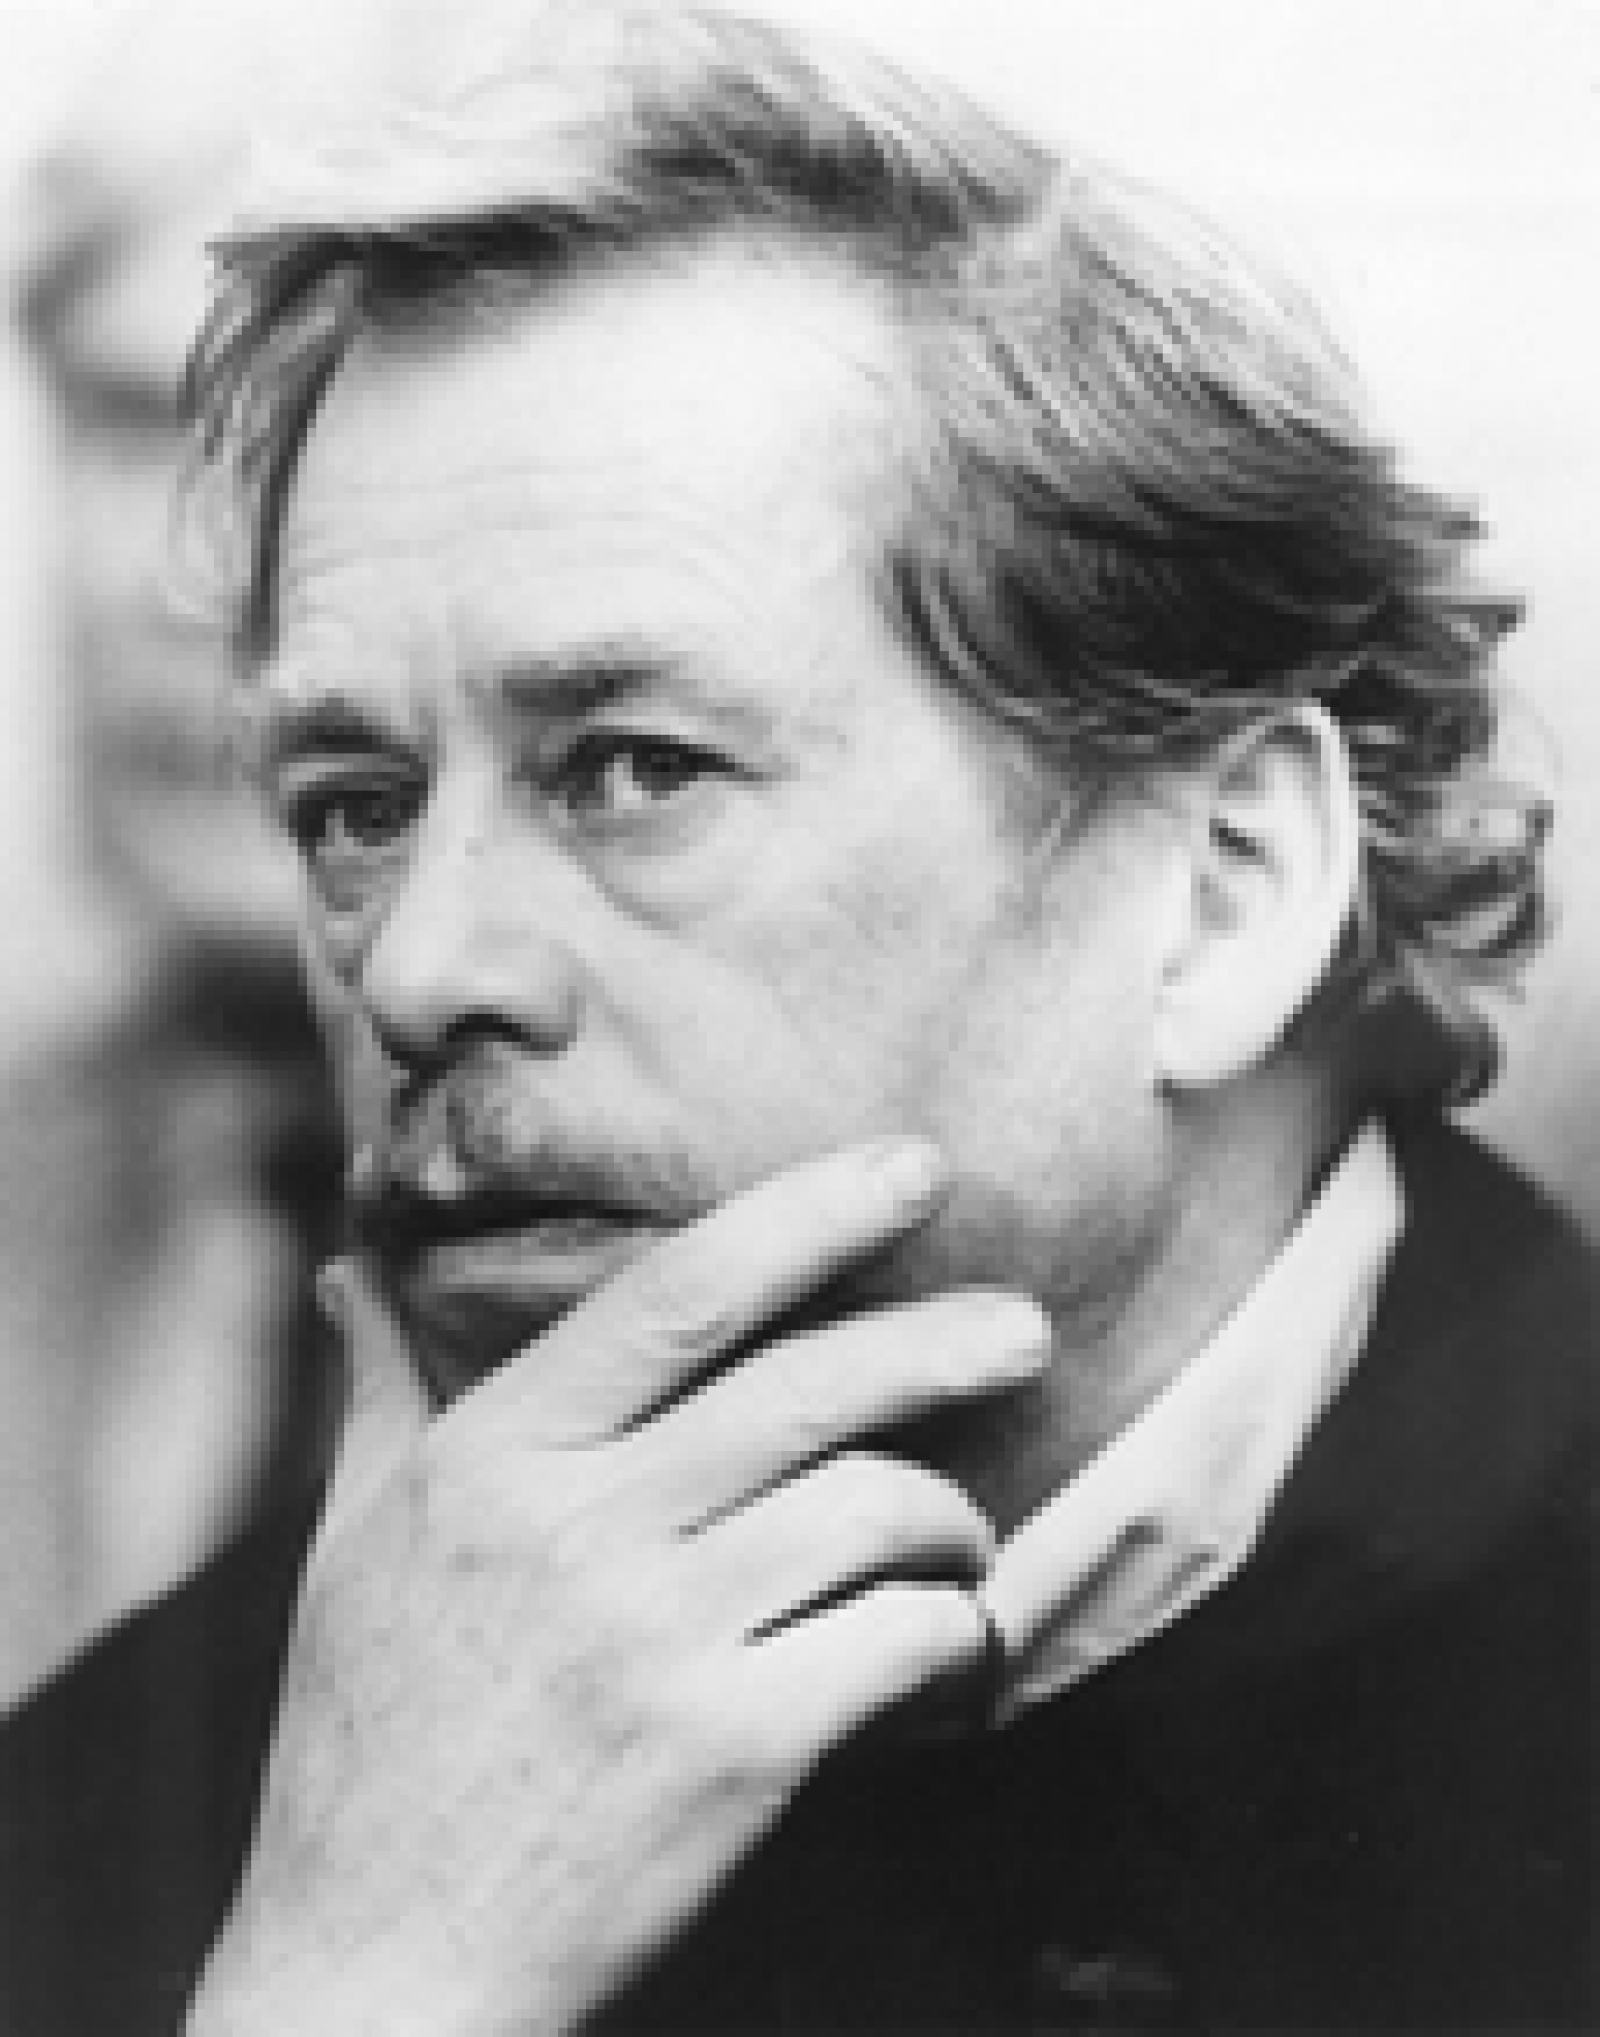 Václav Havel Receives the W. Averell Harriman Democracy Award